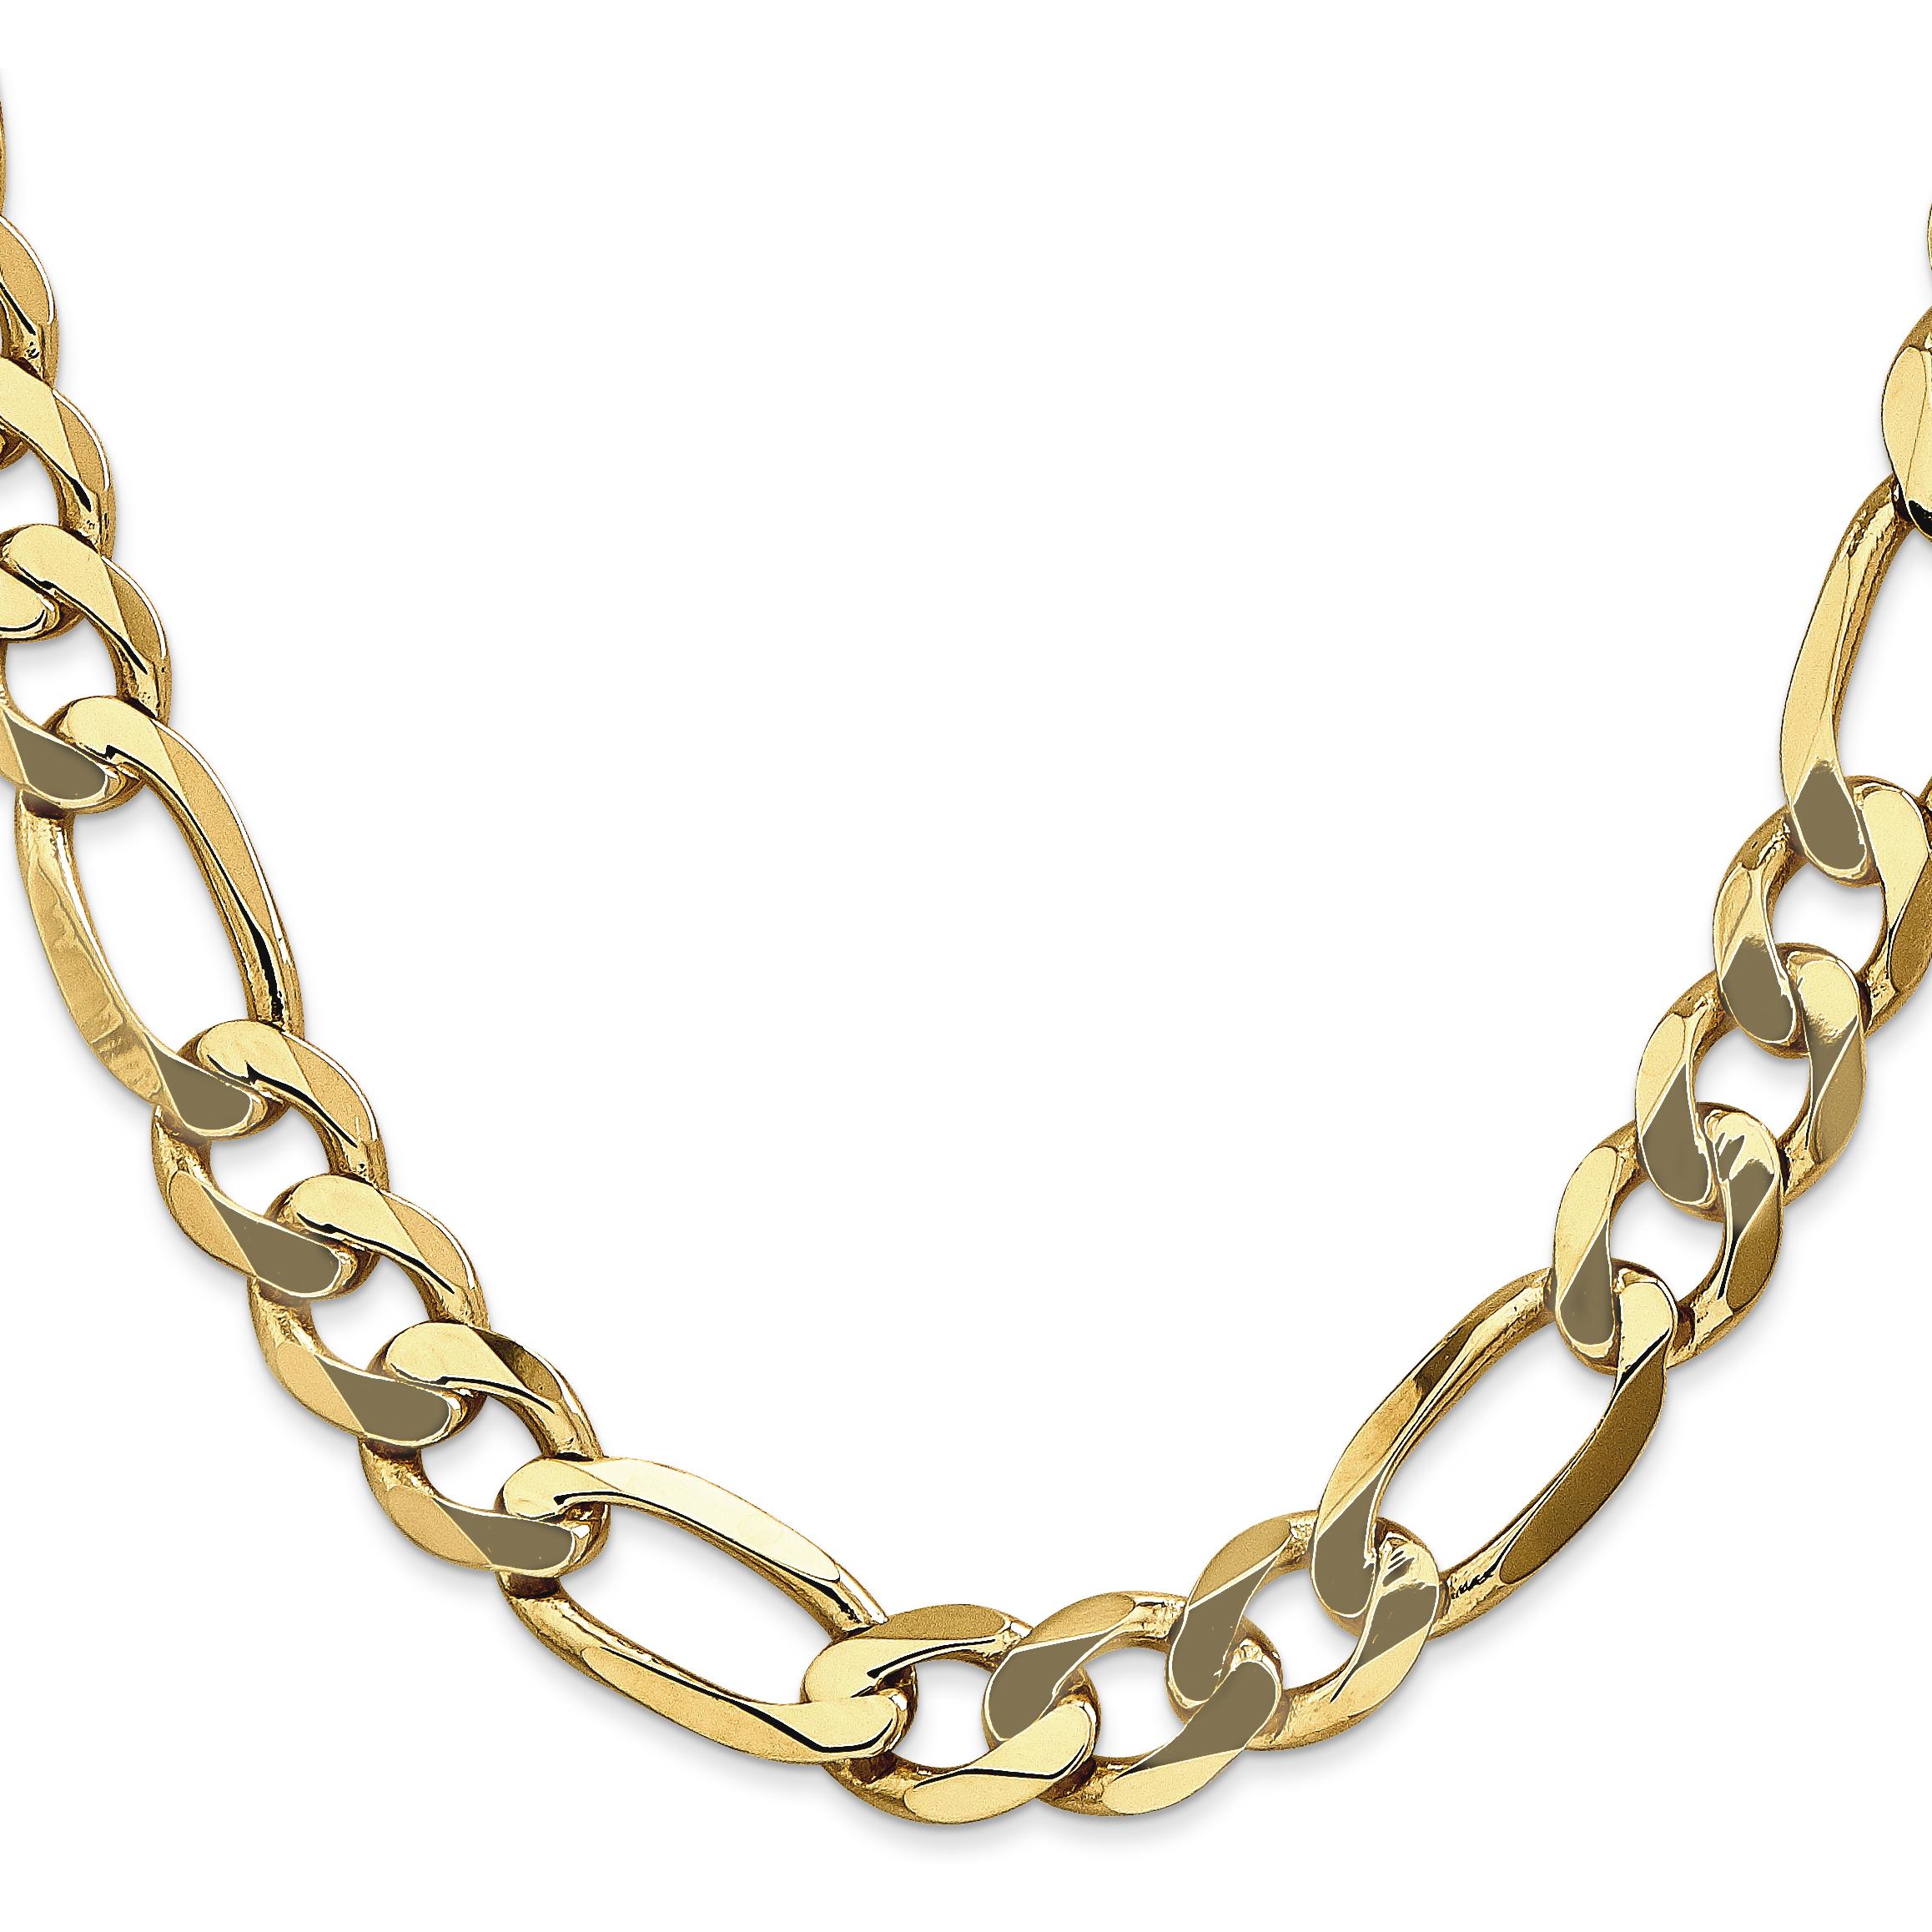 Findingking 14K Gold Flat Figaro Chain Bracelet Jewelry 8" 10mm